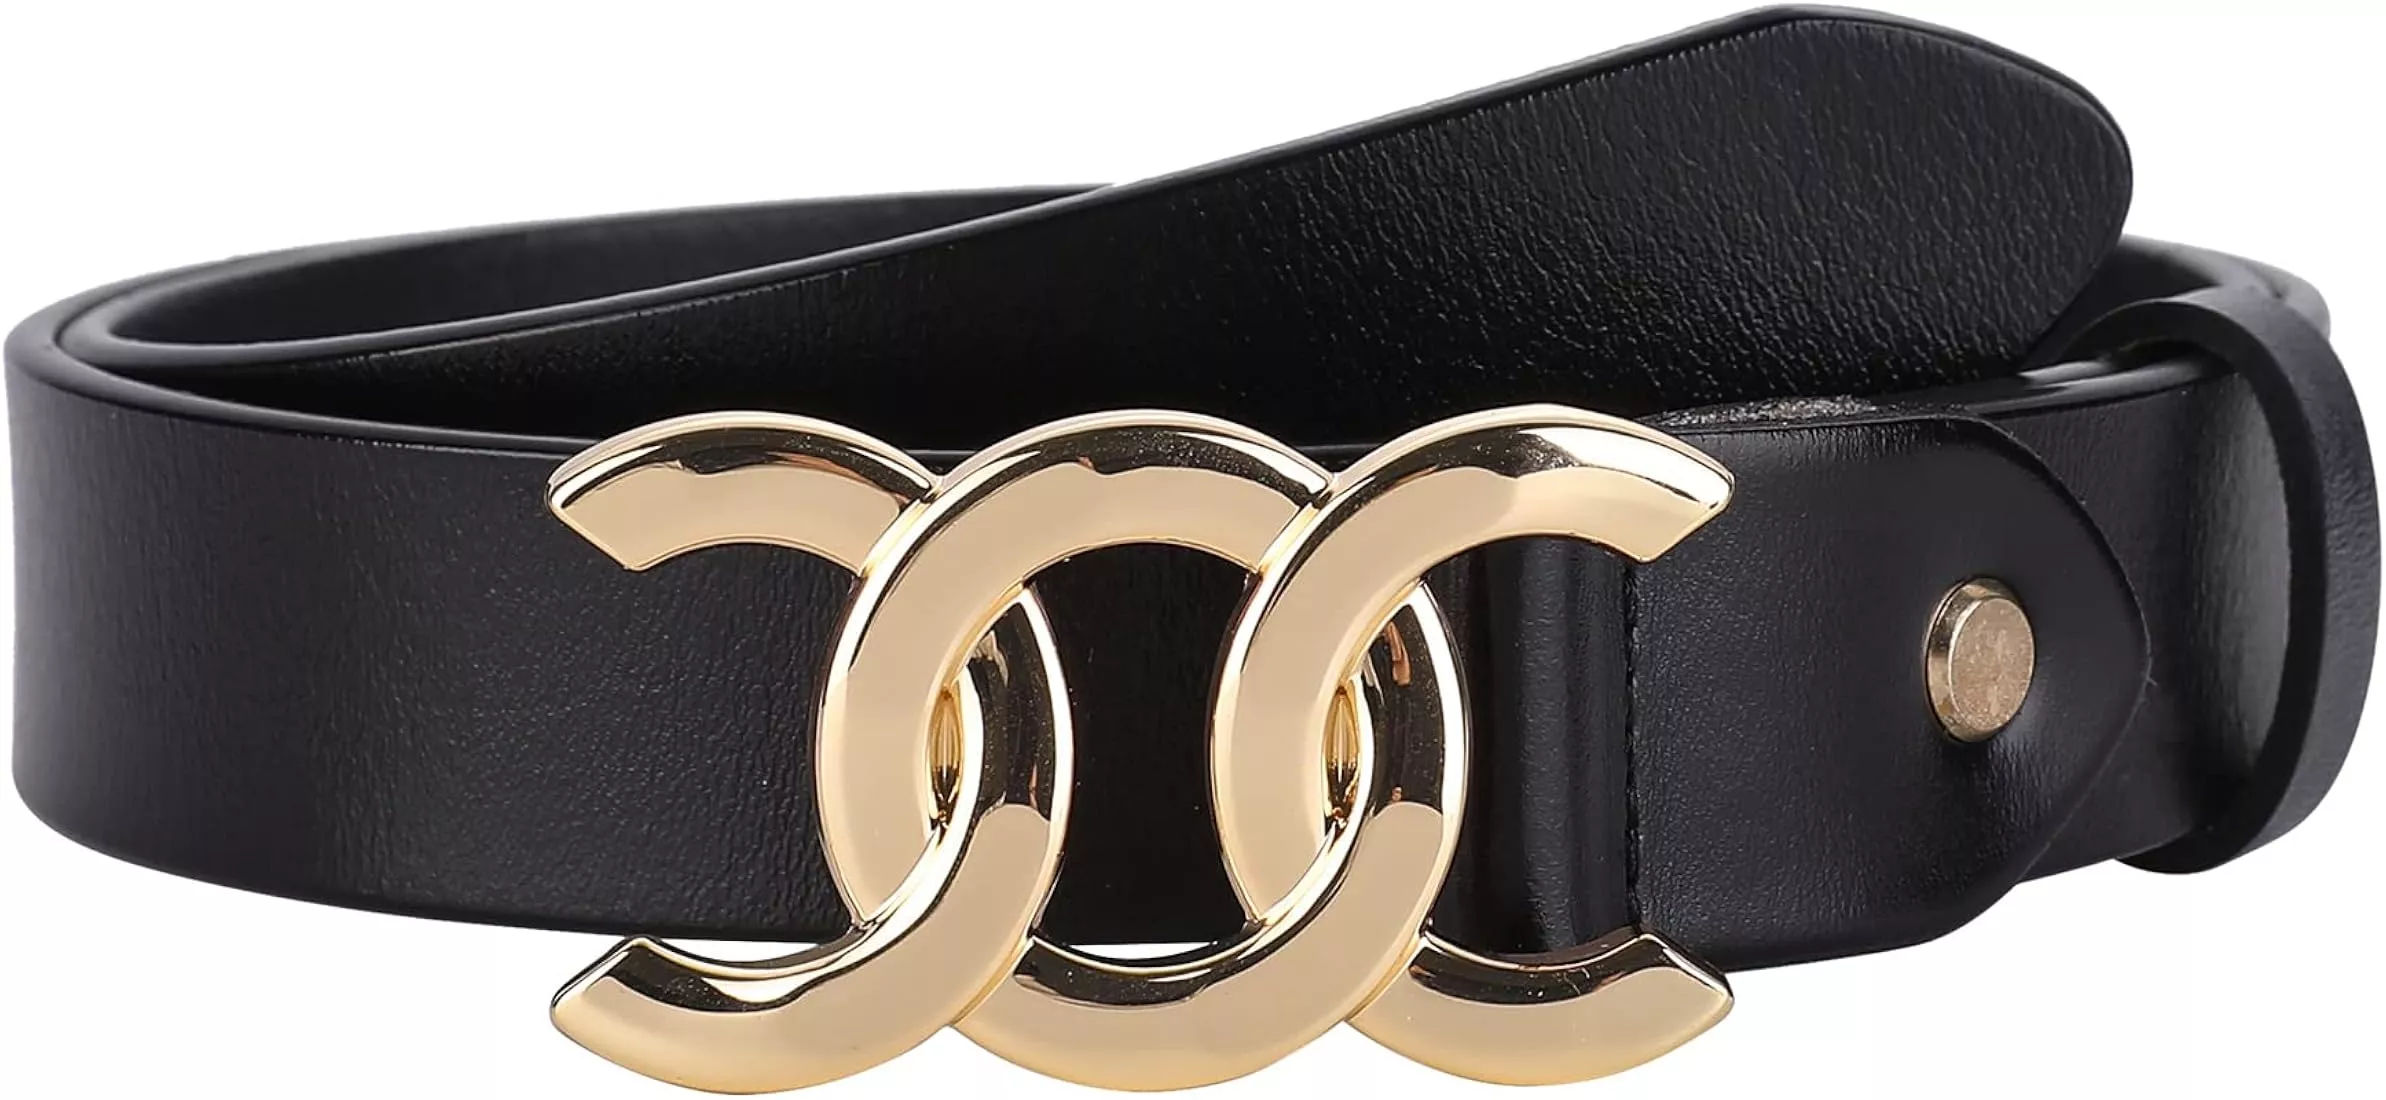 ALAIX Women's Belt Gold Buckle Belt Black leather belt Dress Pants Jeans  belts for women at  Women’s Clothing store